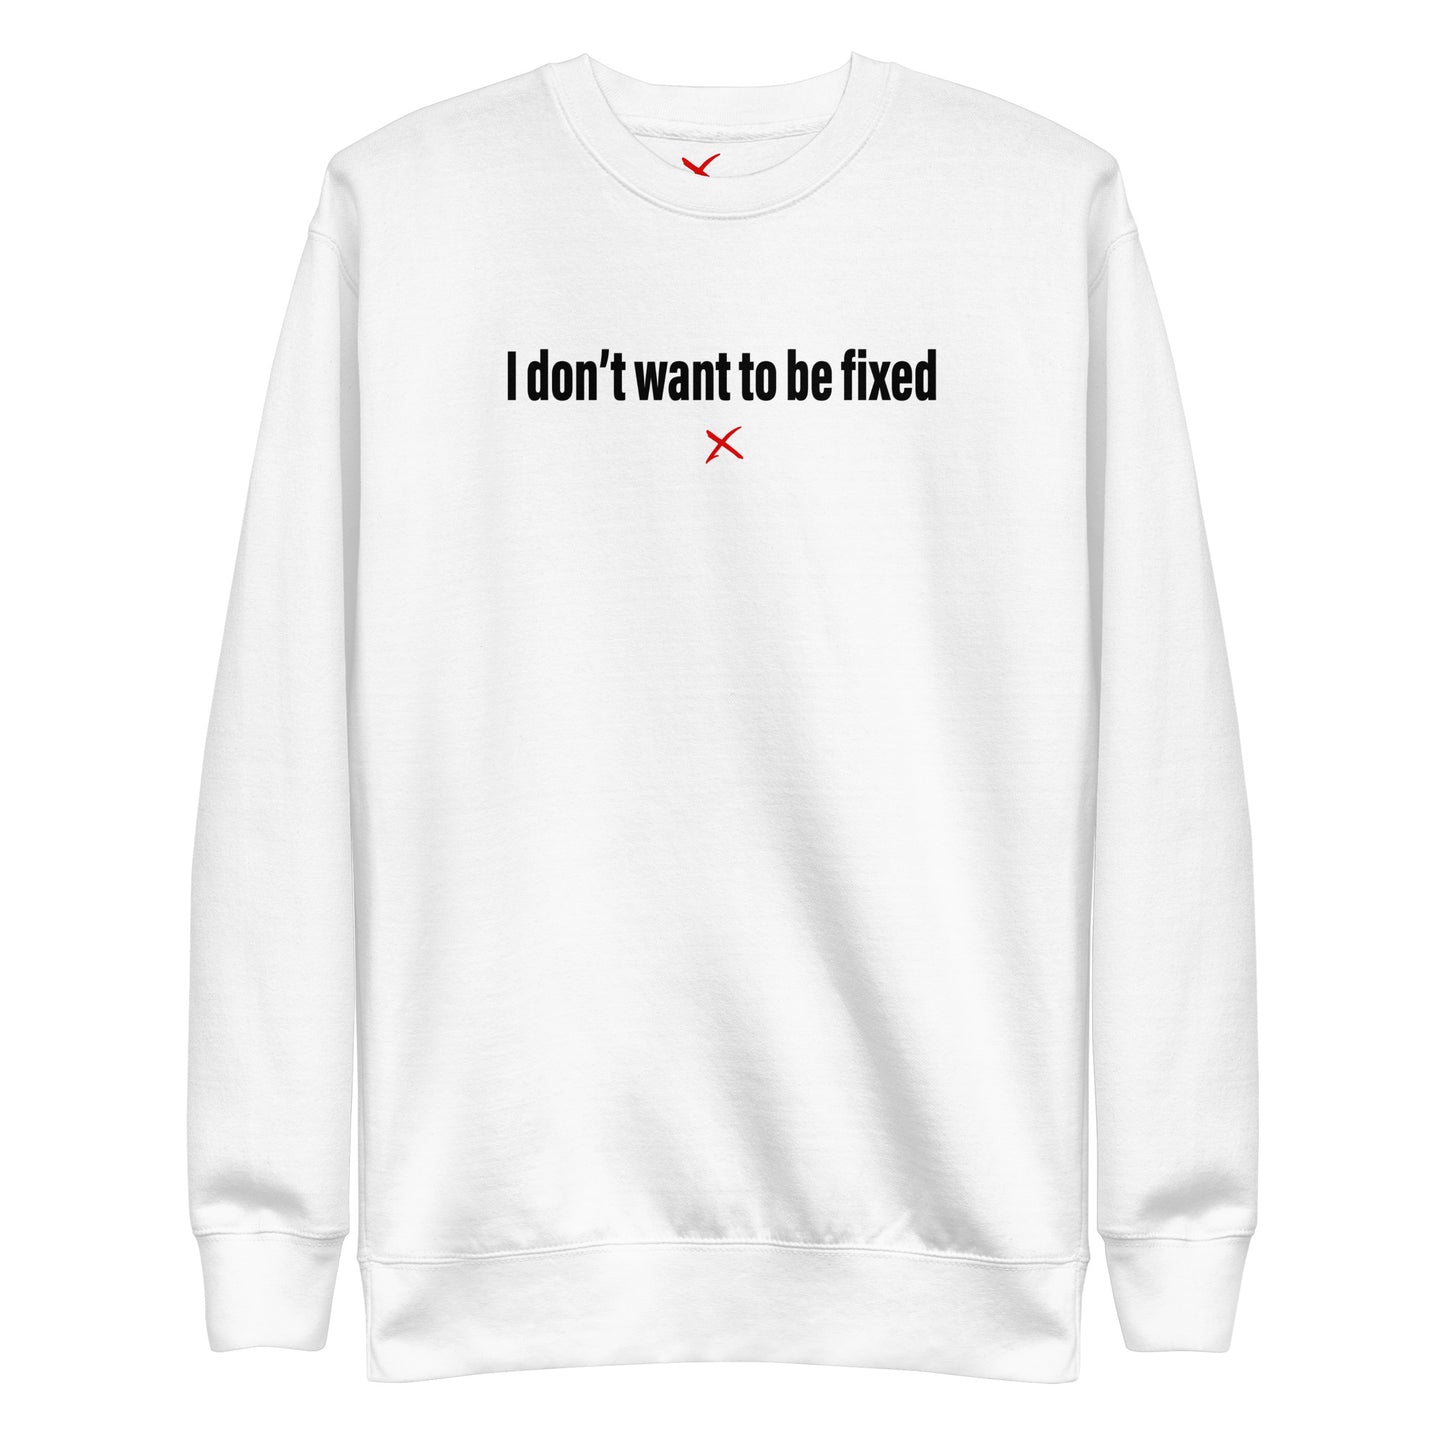 I don't want to be fixed - Sweatshirt